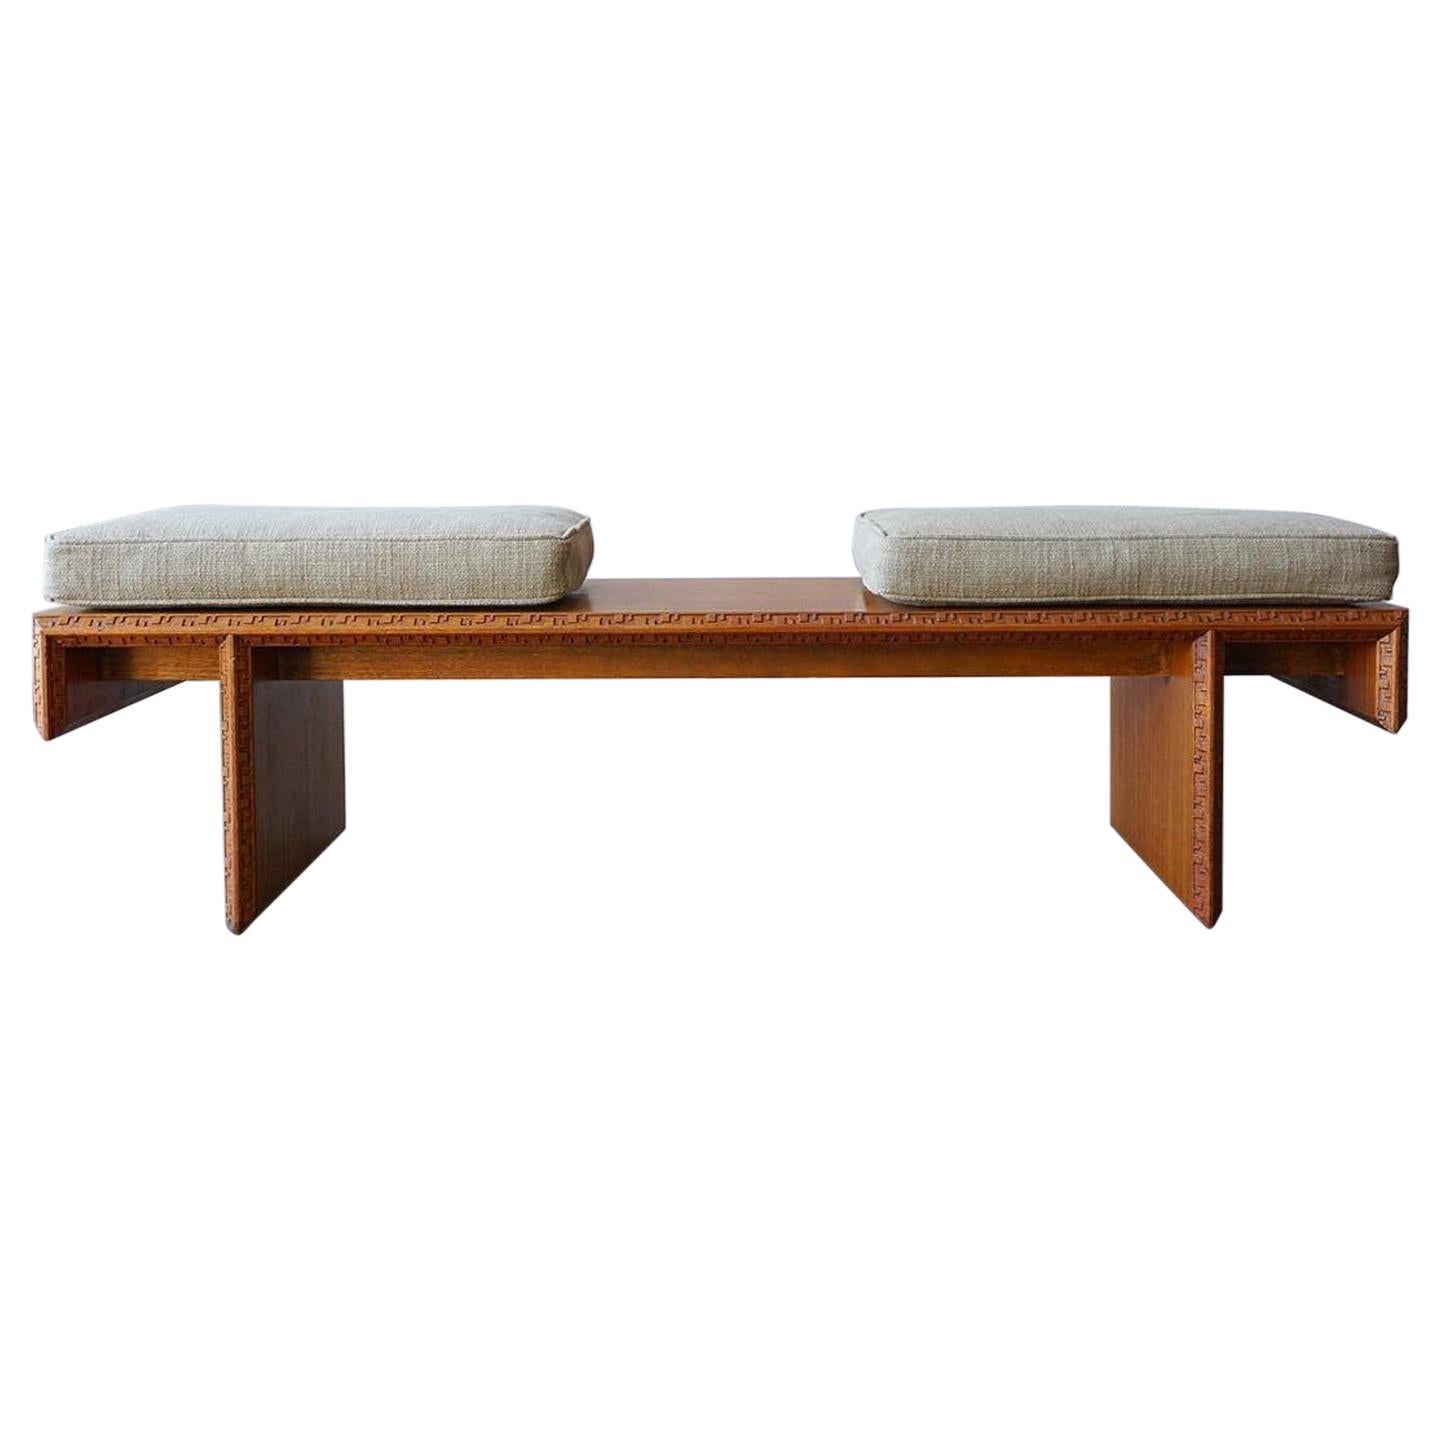 Frank Lloyd Wright Coffee Mahogany Table or Bench